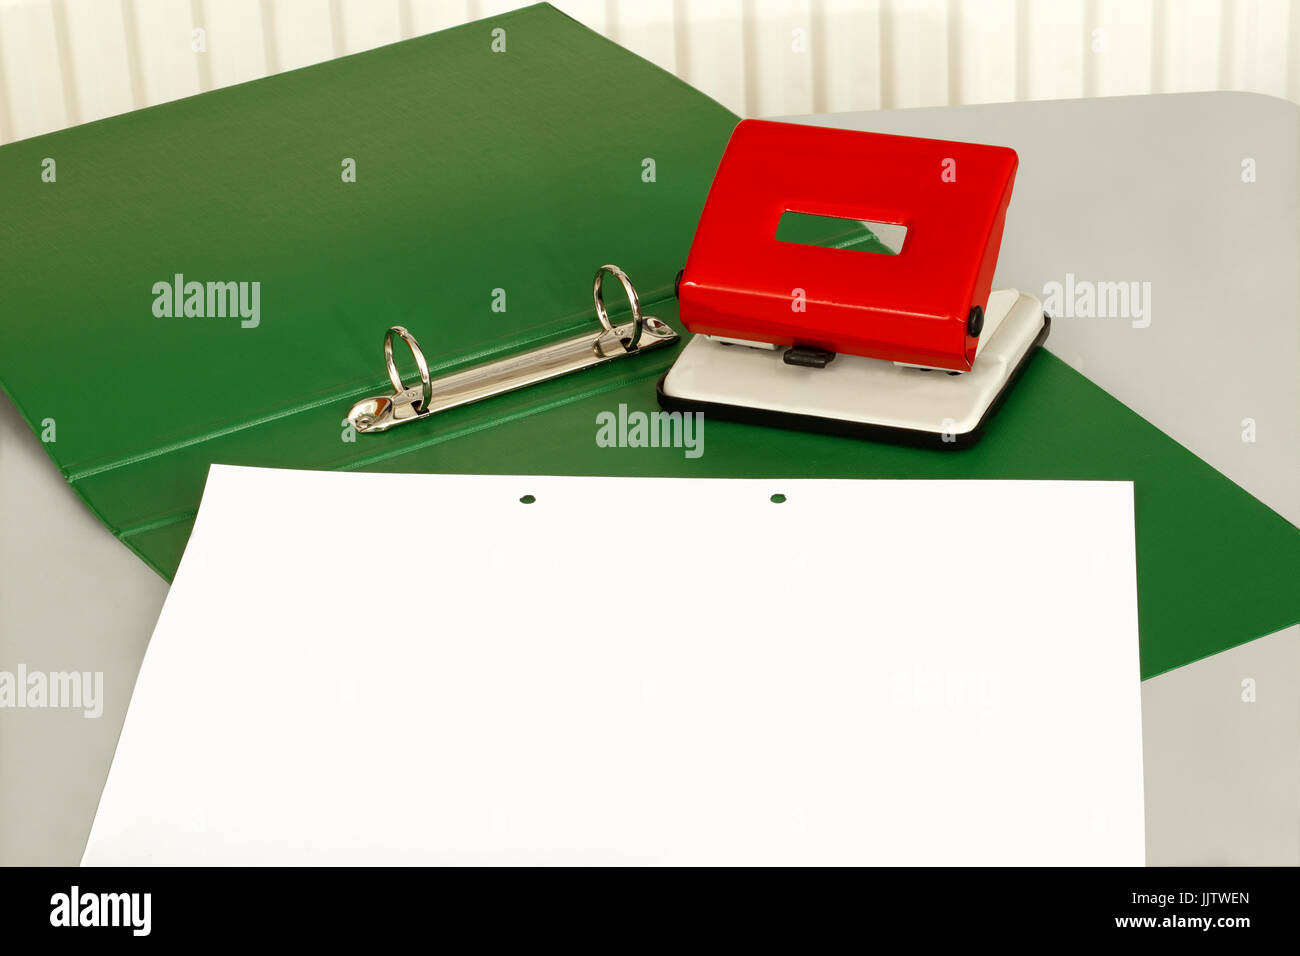 A Hole Punch Sitting On A Green Folder With A Sheet Of Plain Paper JJTWEN 